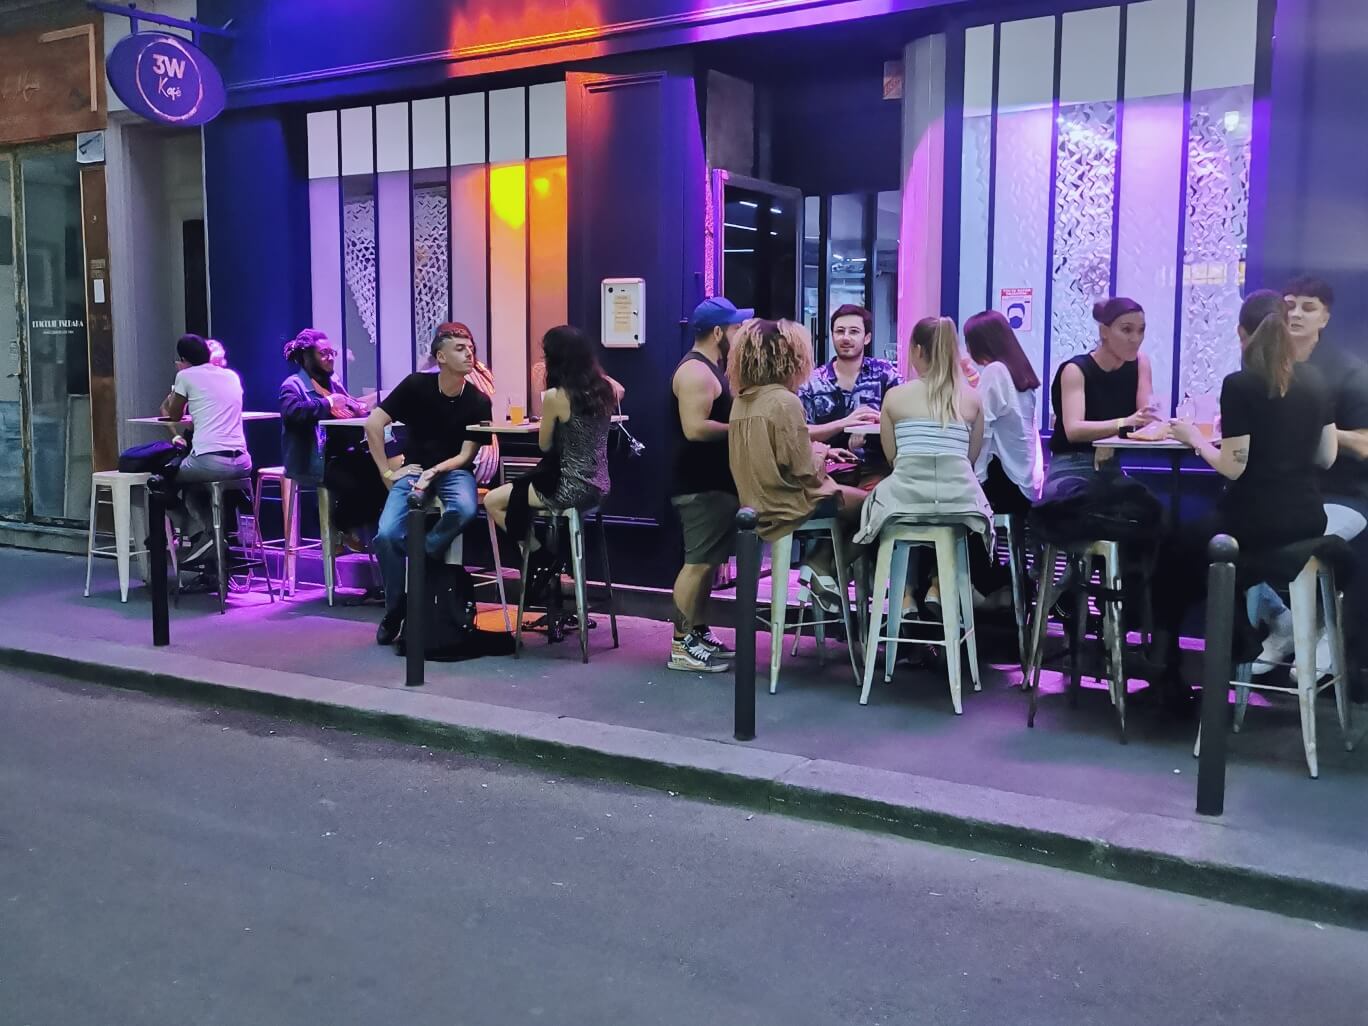 locali gay parigi, bar per lesbiche, 3w café